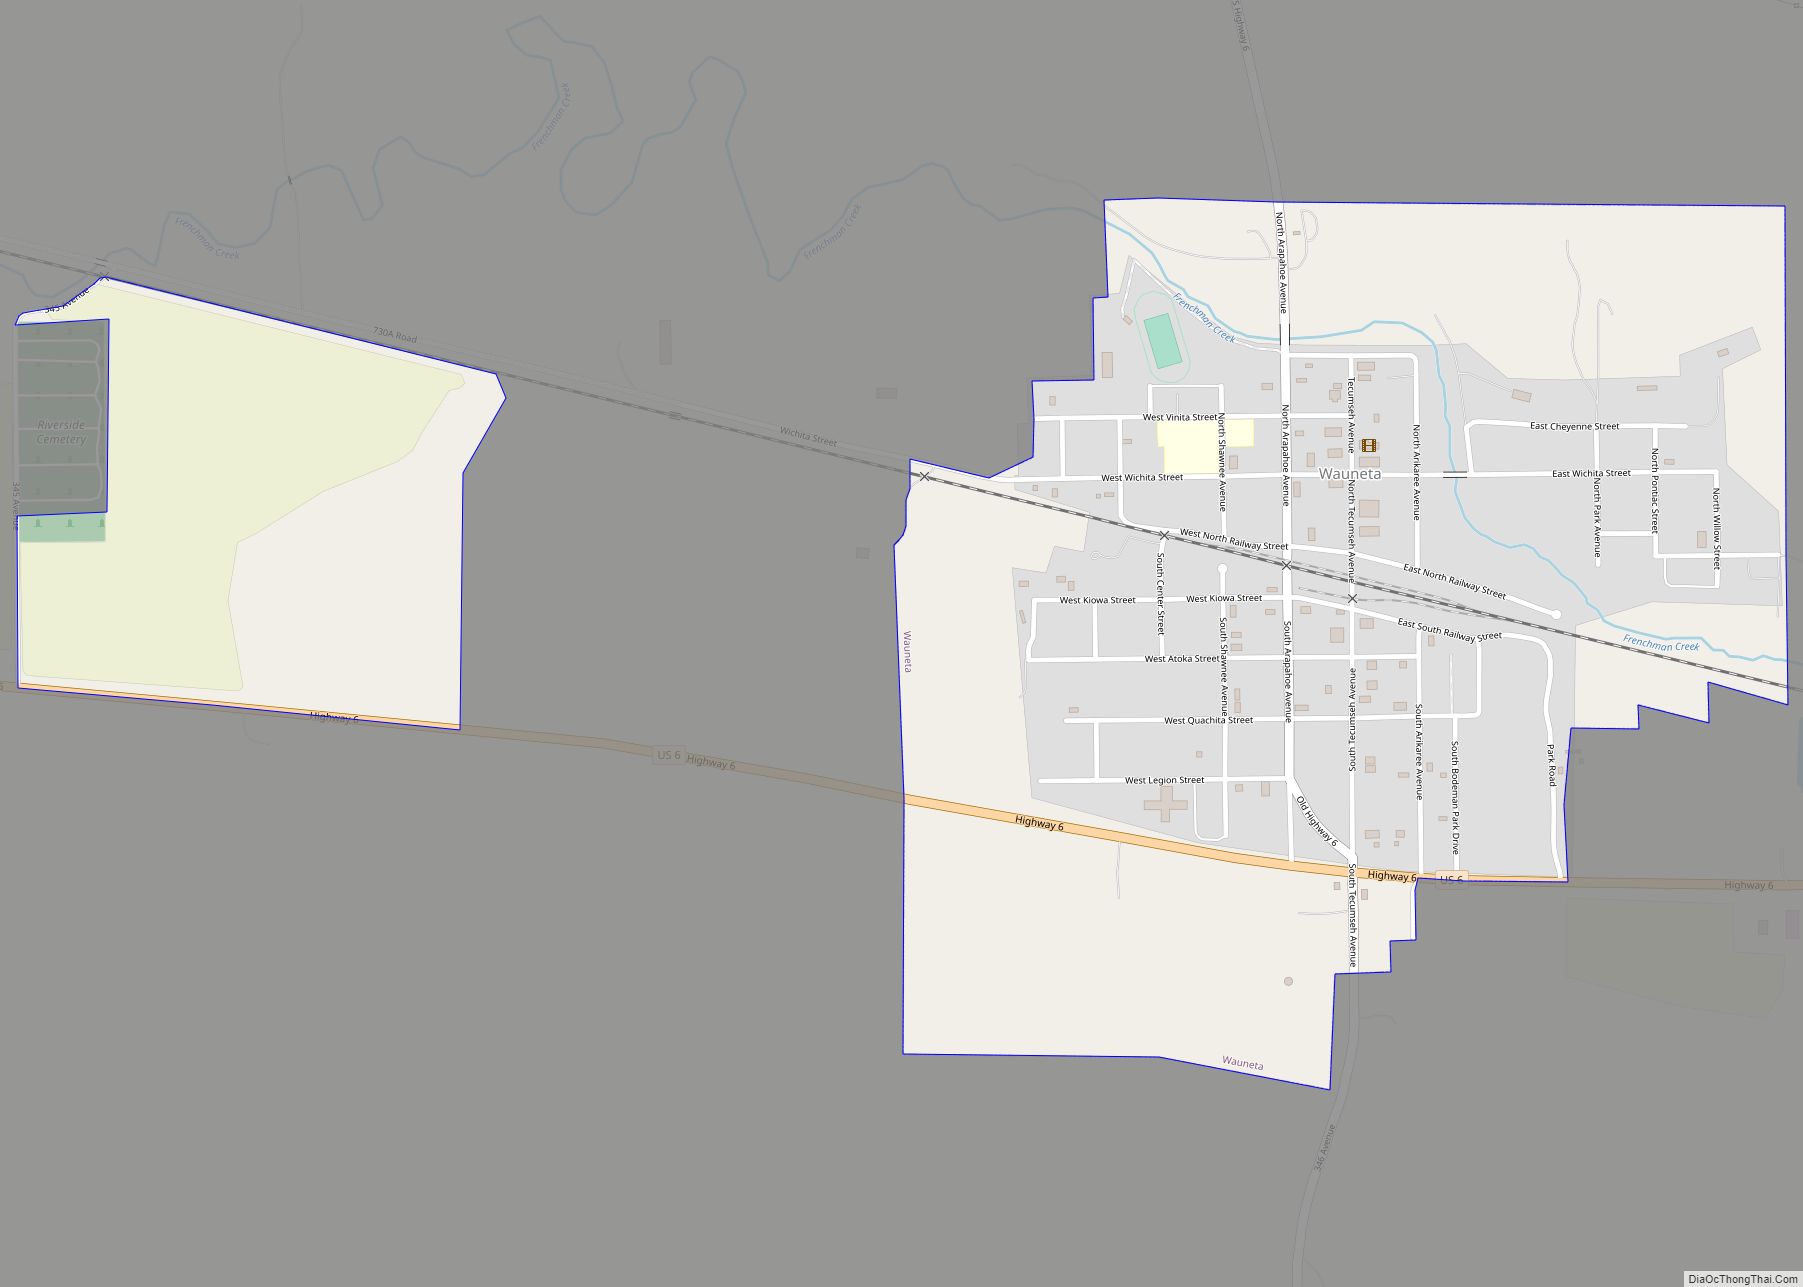 Map of Wauneta village